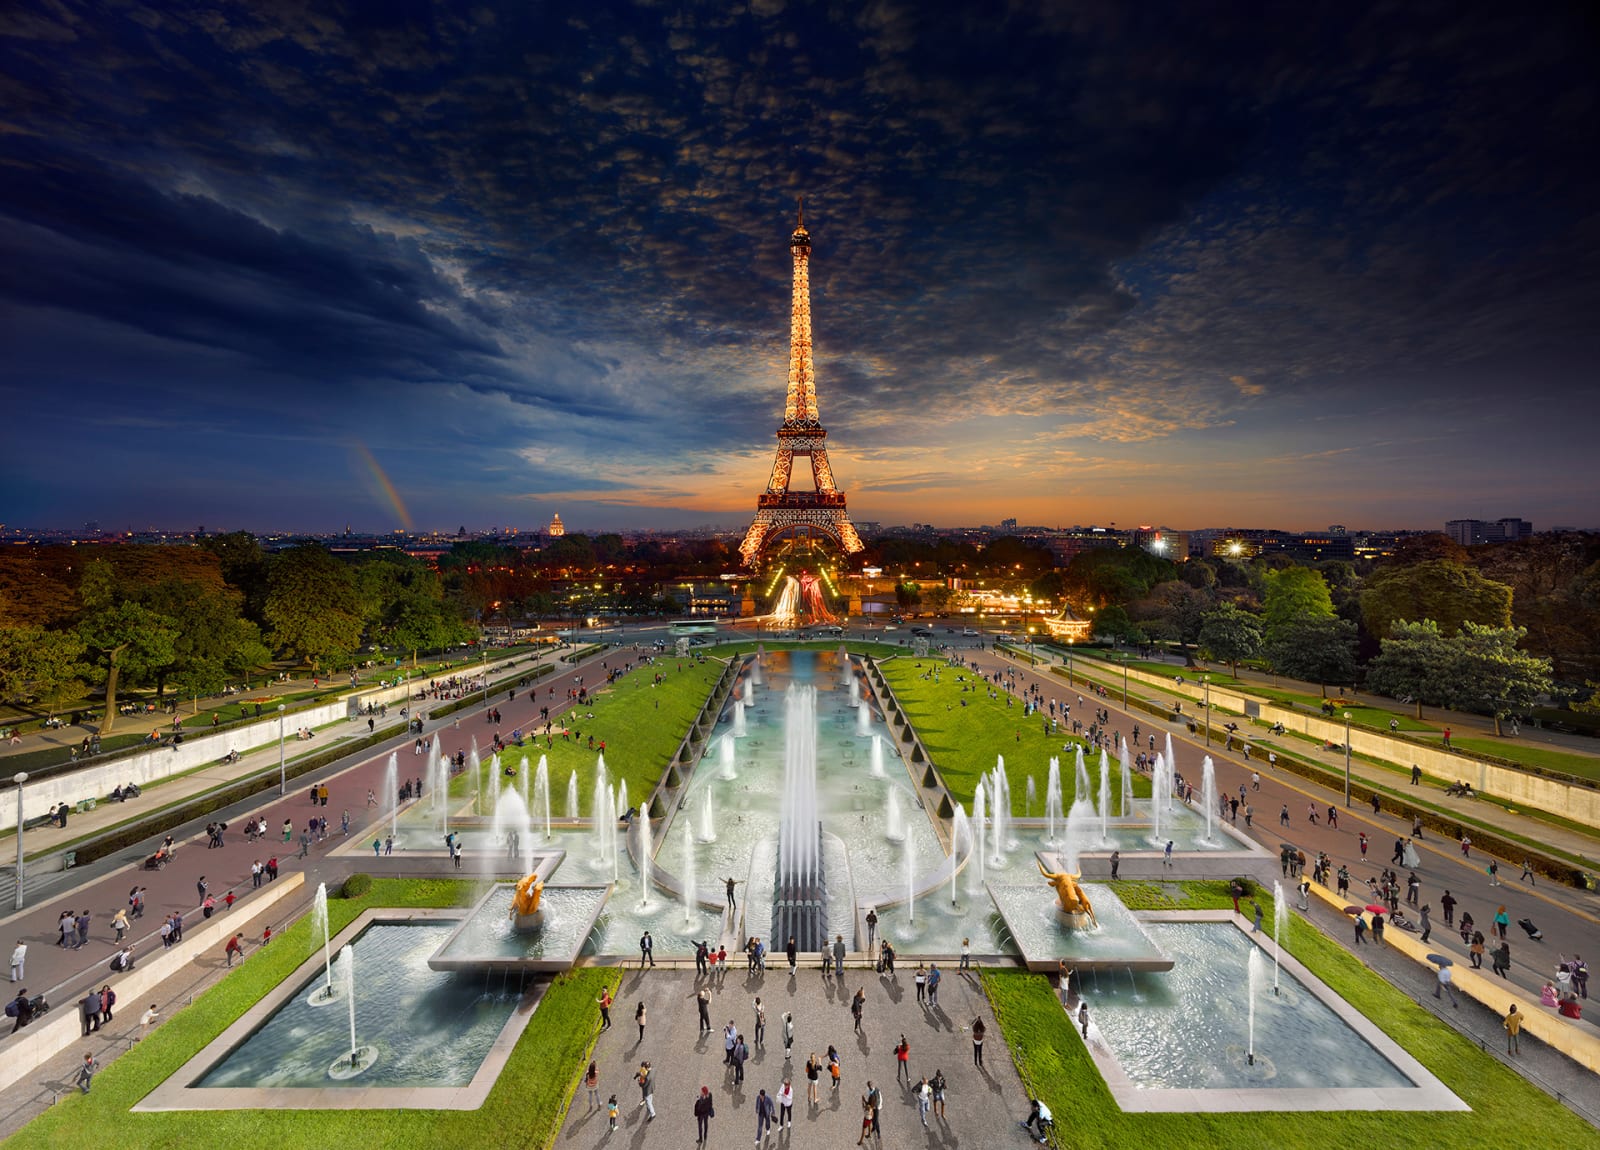 Stephen Wilkes, Eiffel Tower, Paris, Day to Night™, 2013